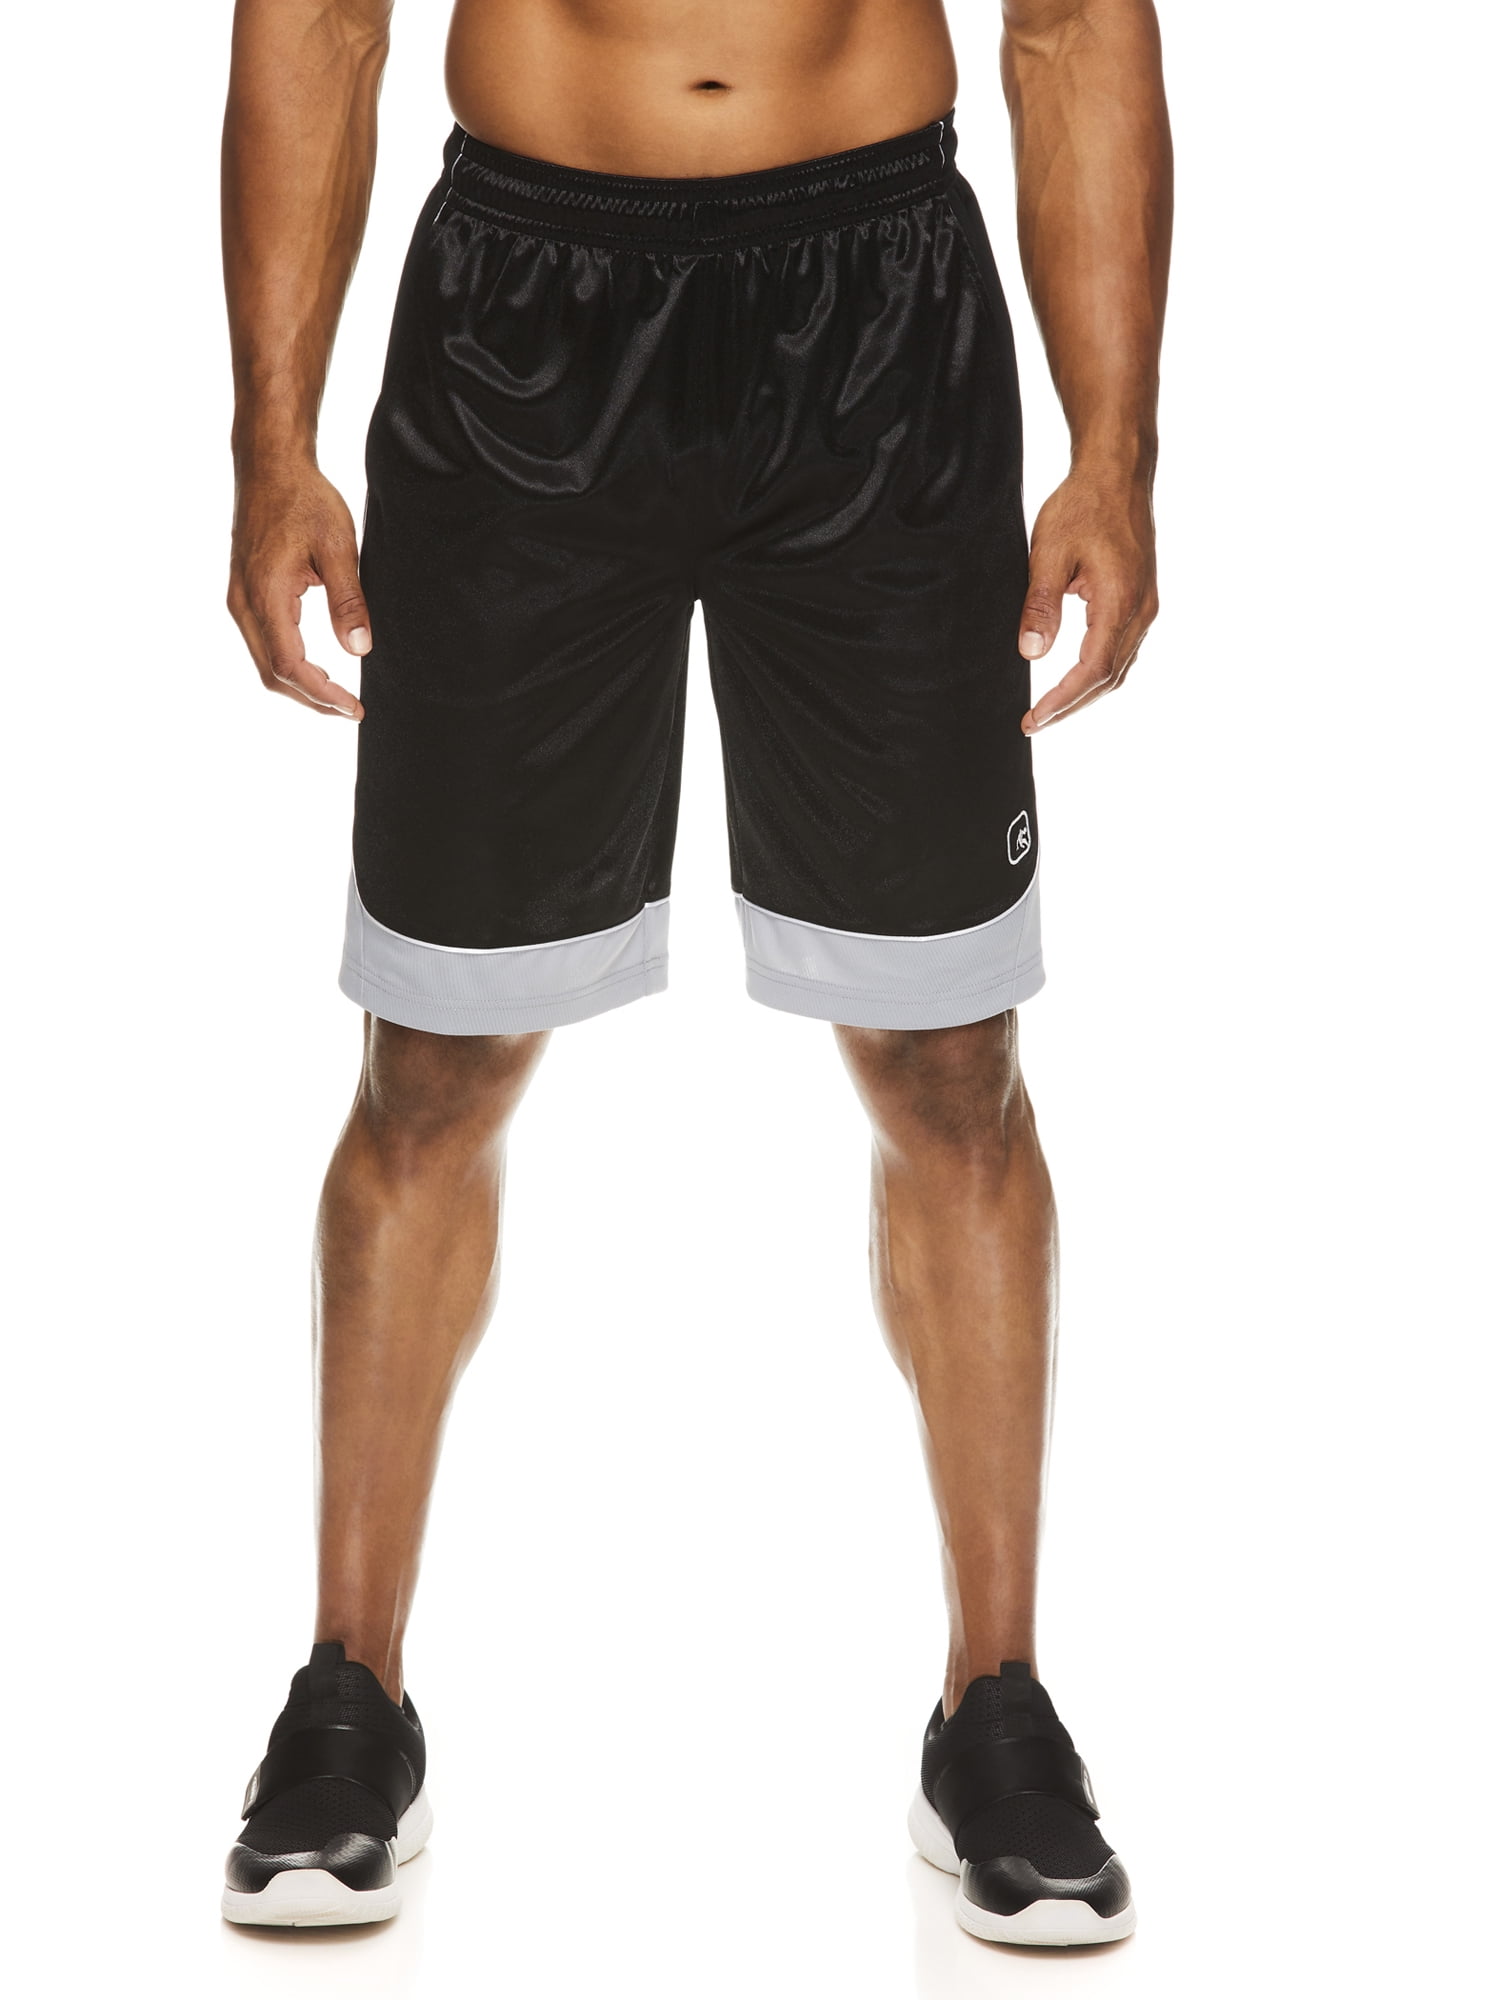 MusclePharm Mens MP Virus Airflex Active Shorts Black/Green mma fitness